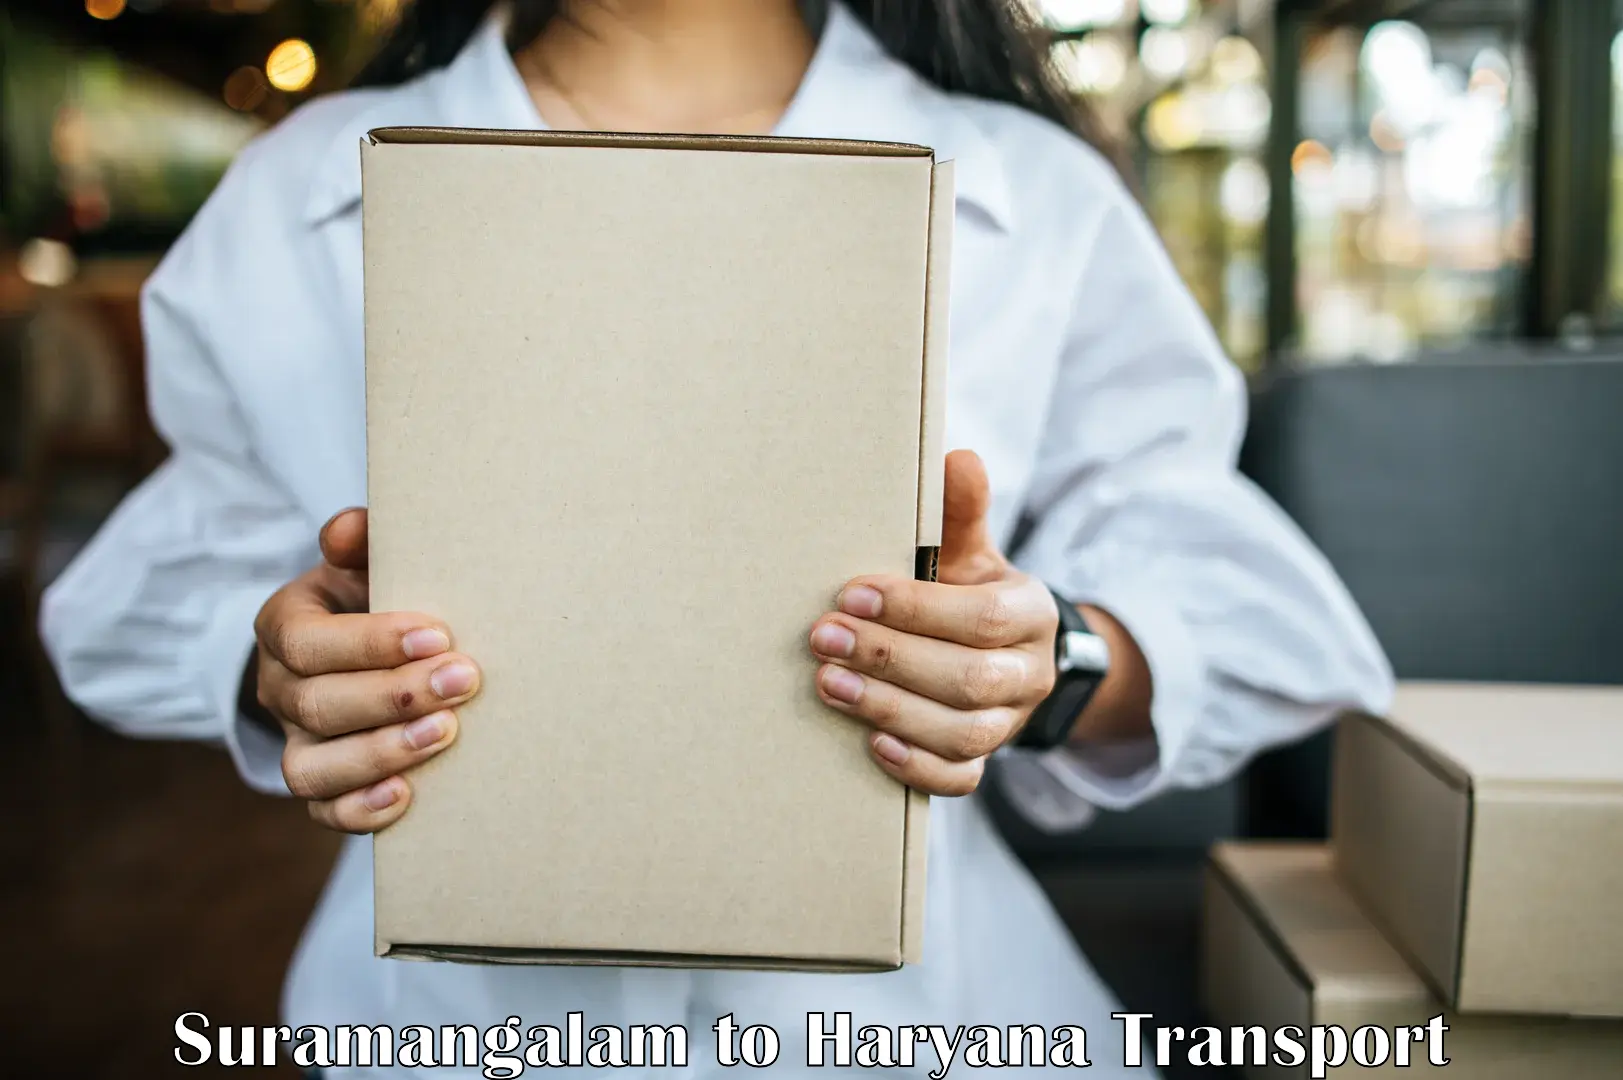 Online transport service Suramangalam to Gurugram